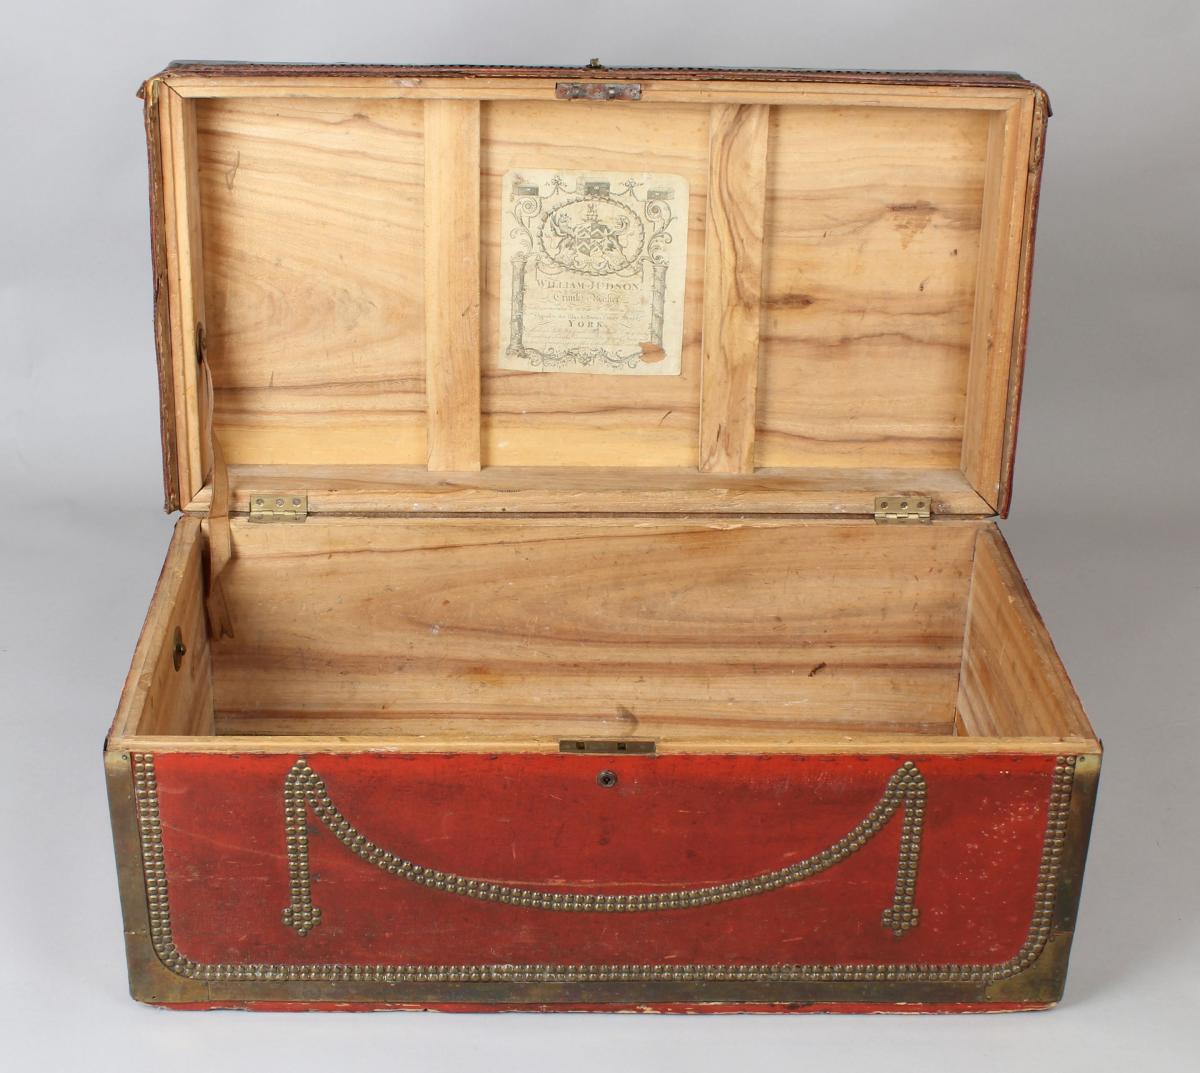 Rare George III period travelling trunk